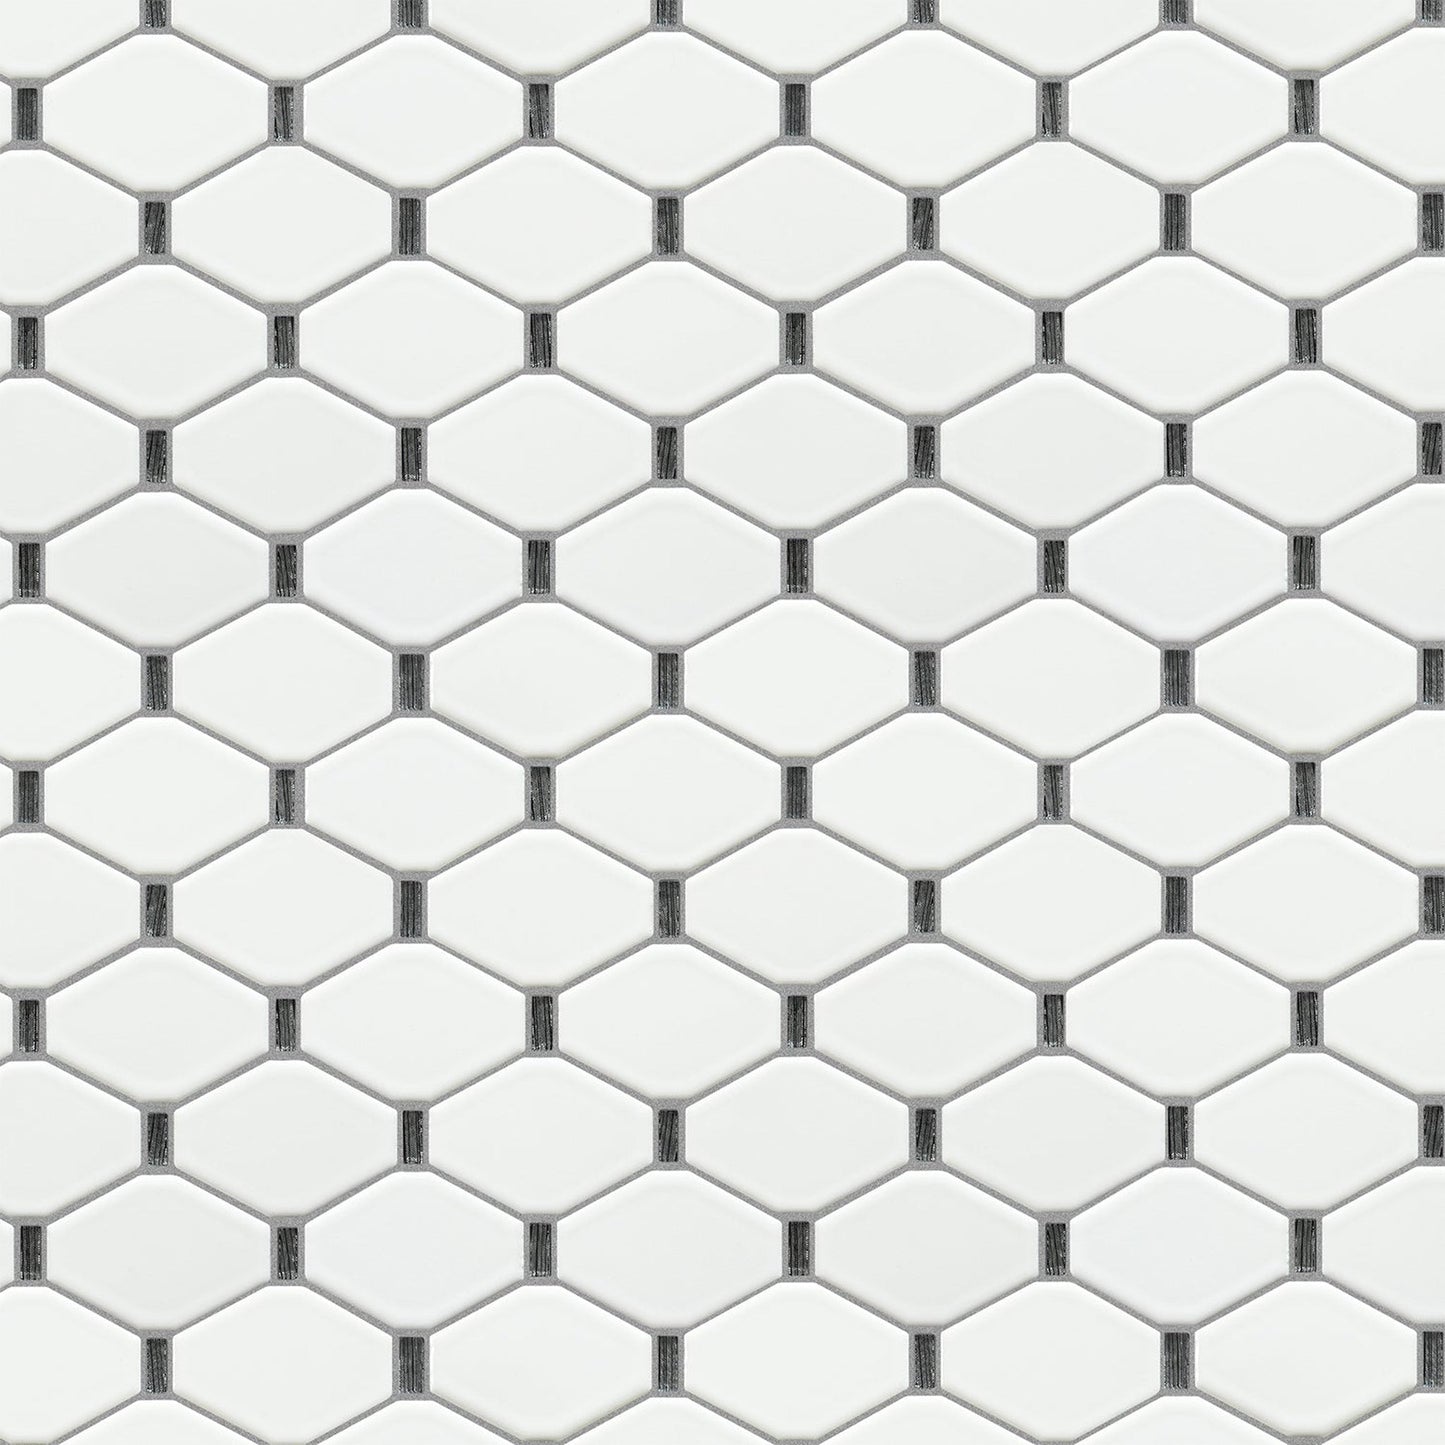 Altair Badajoz 11 pcs. Honeycomb White and Black Glass Mosaic Wall Tile